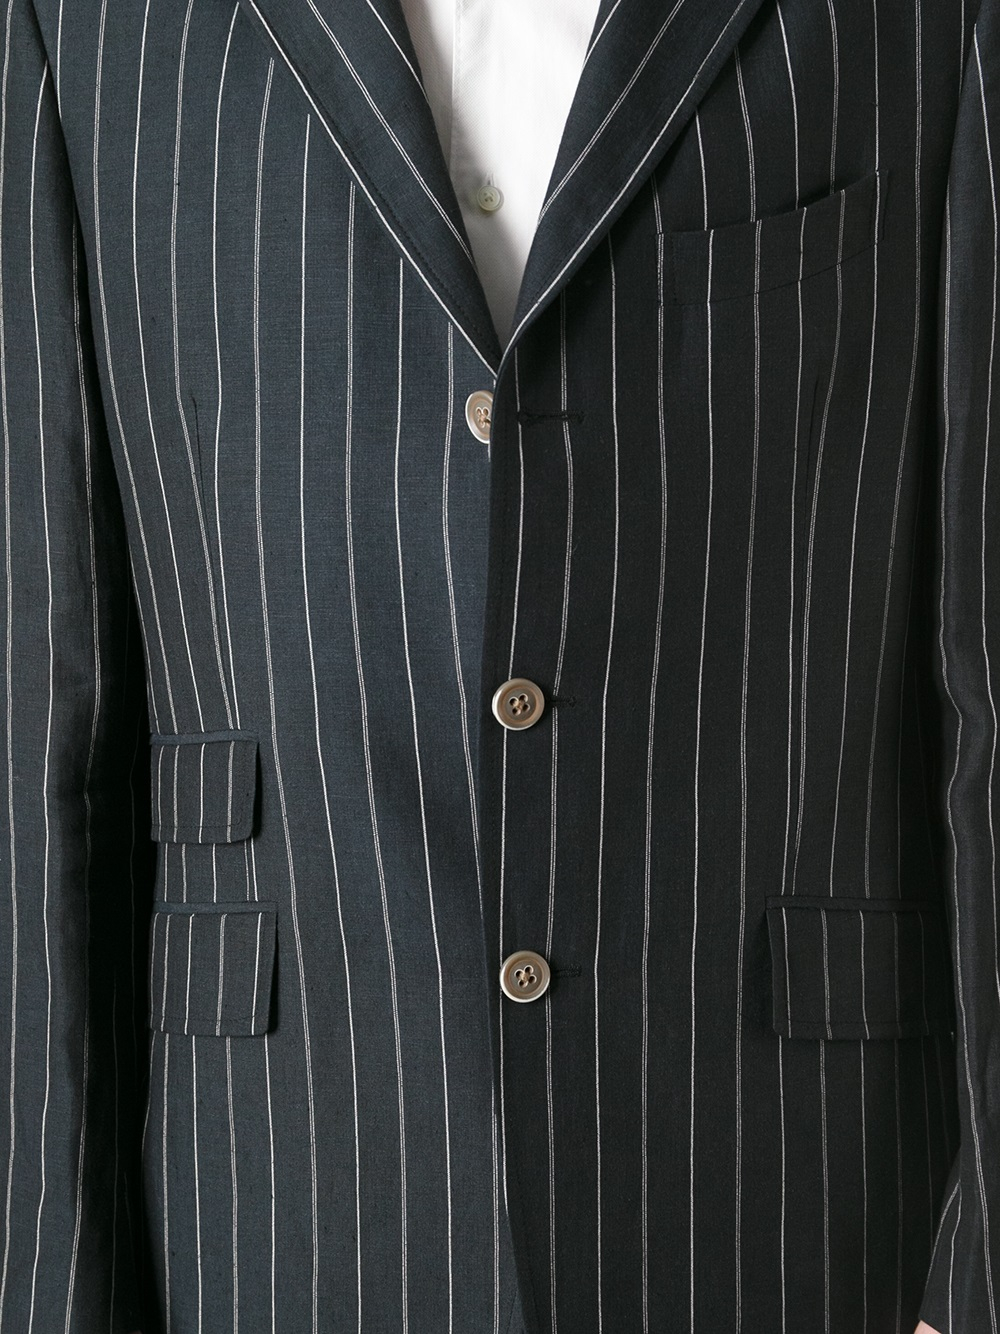 Etro Pinstripe Suit in Black for Men | Lyst